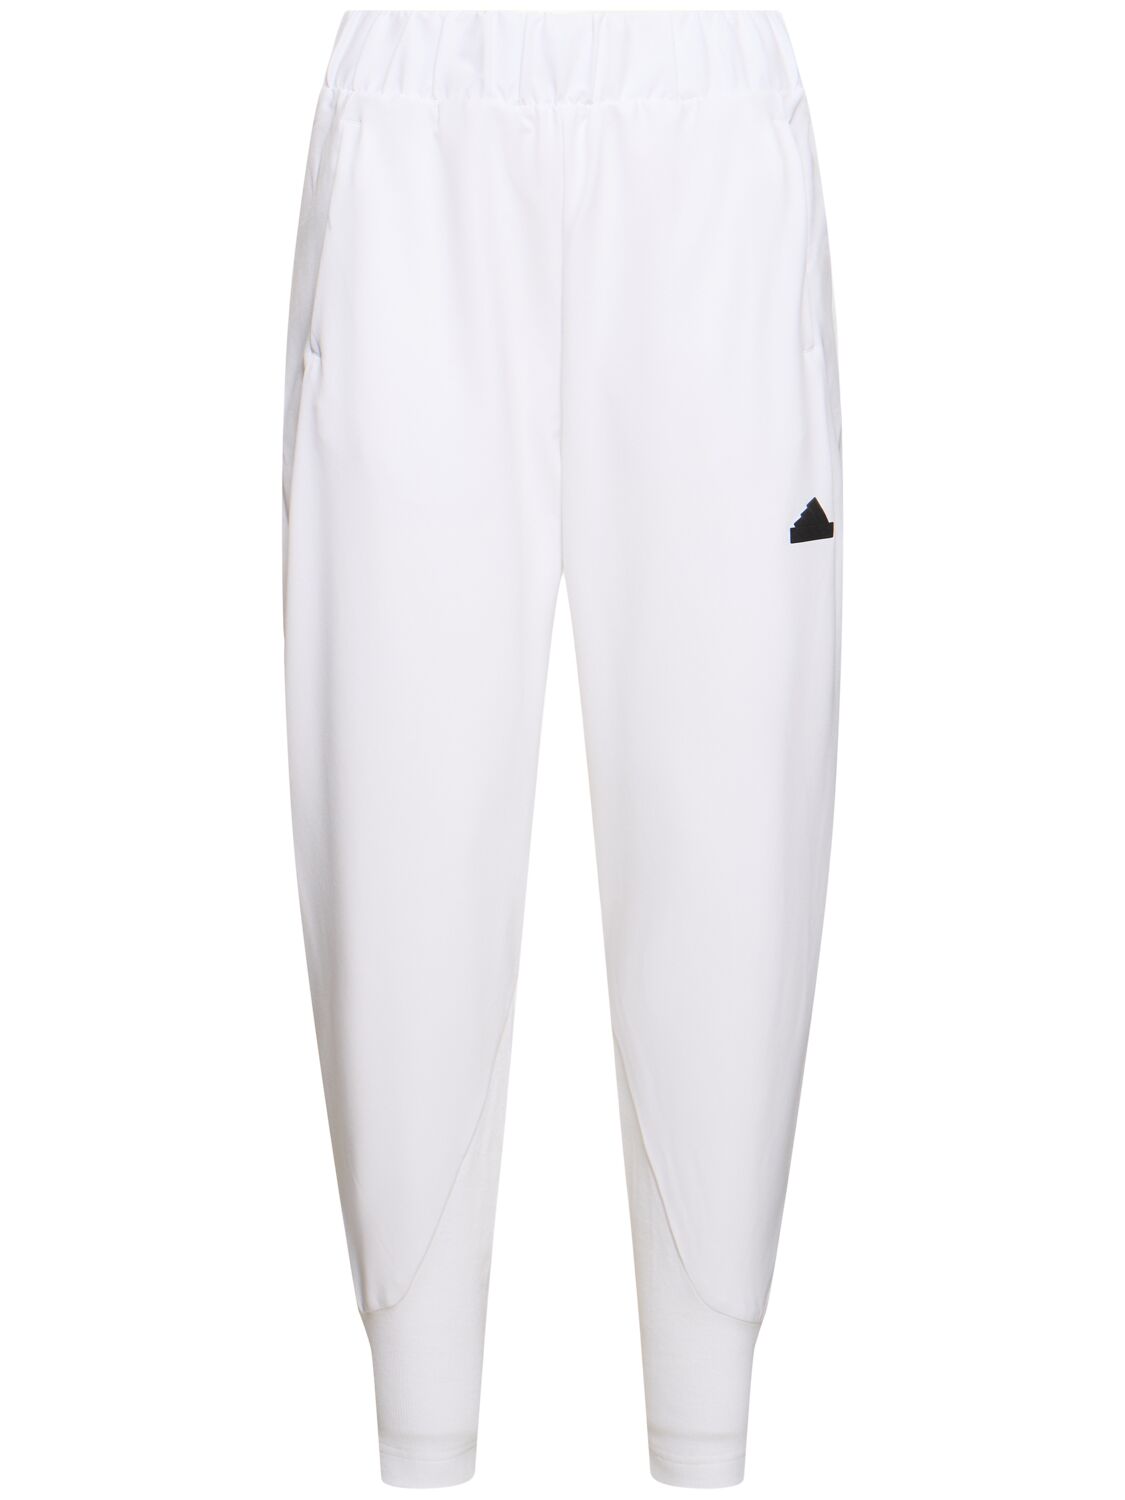 Adidas Originals Zone Pants In White